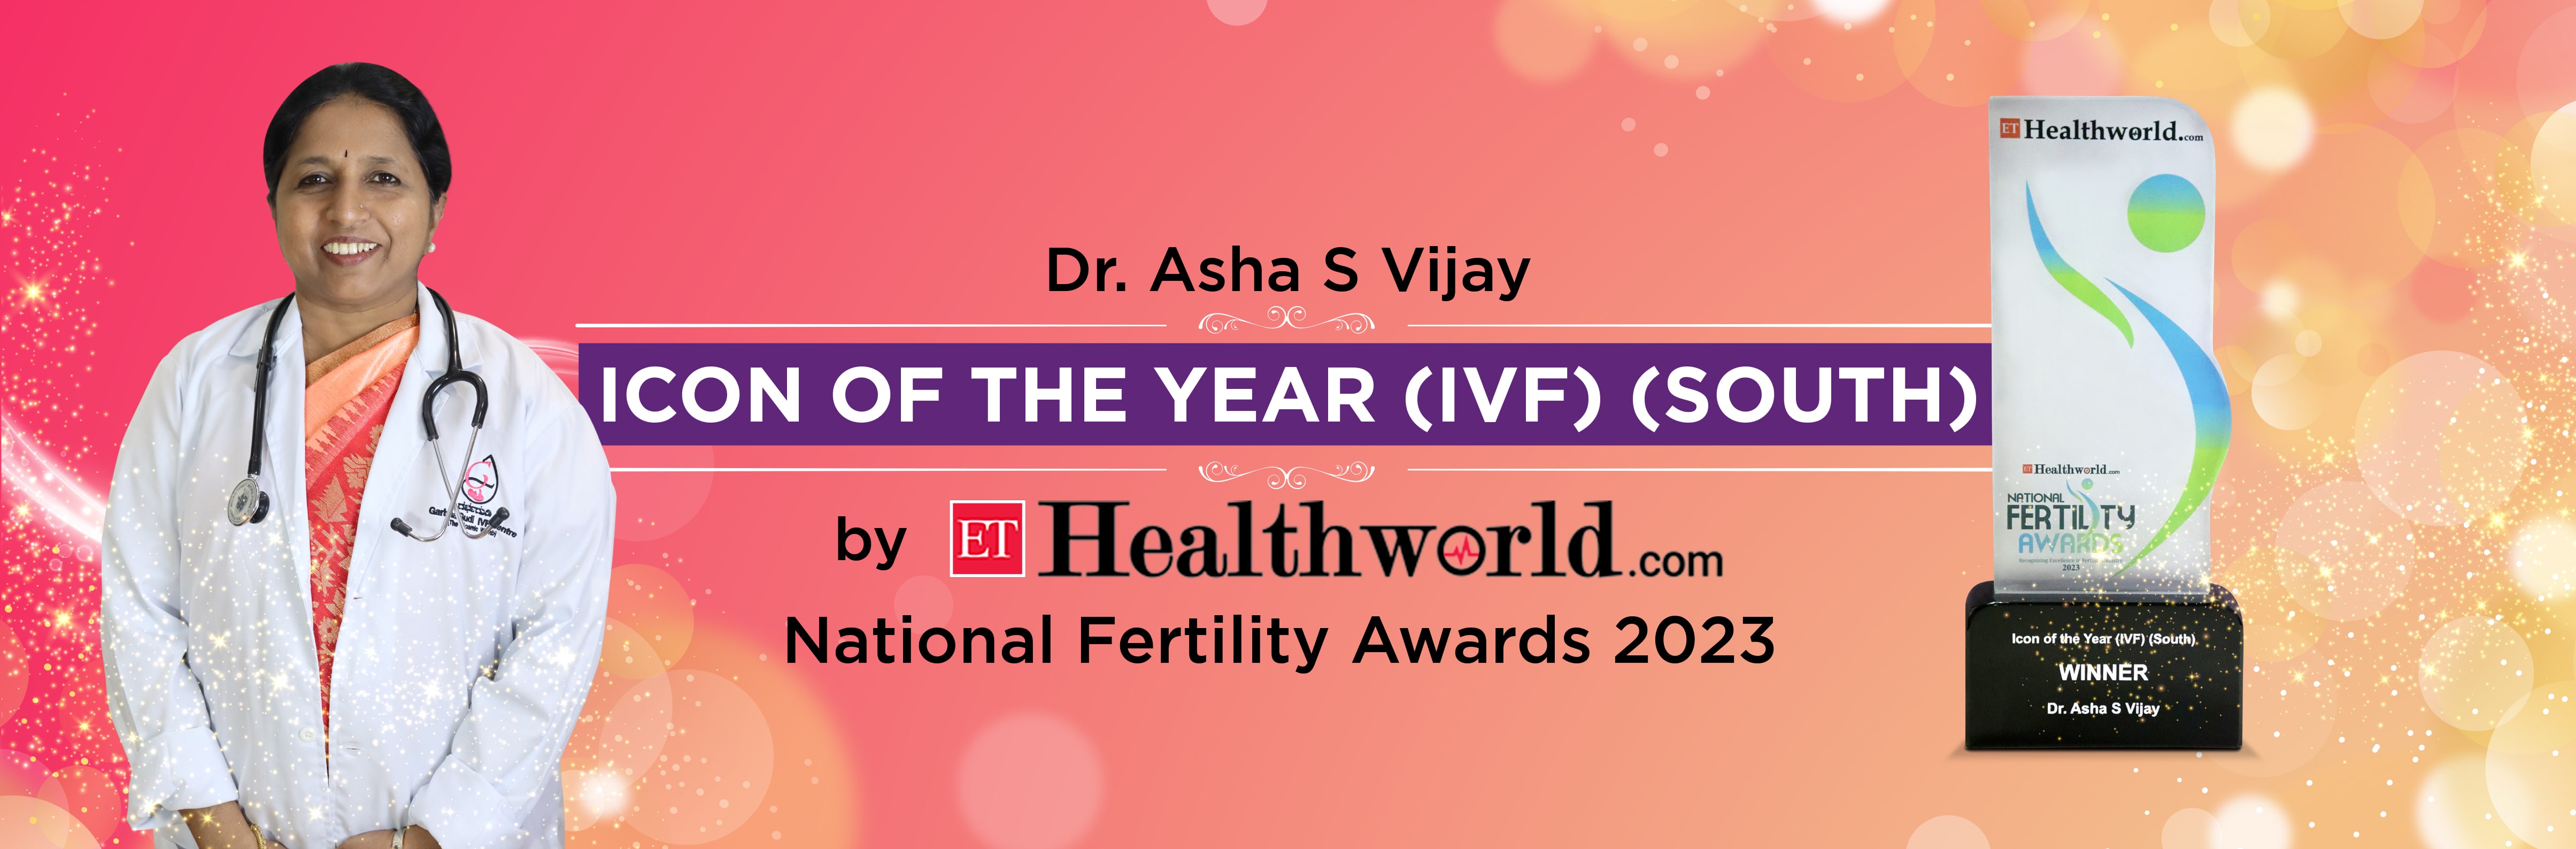 ICON of the Year IVF (south) Dr. Asha S Vijay 